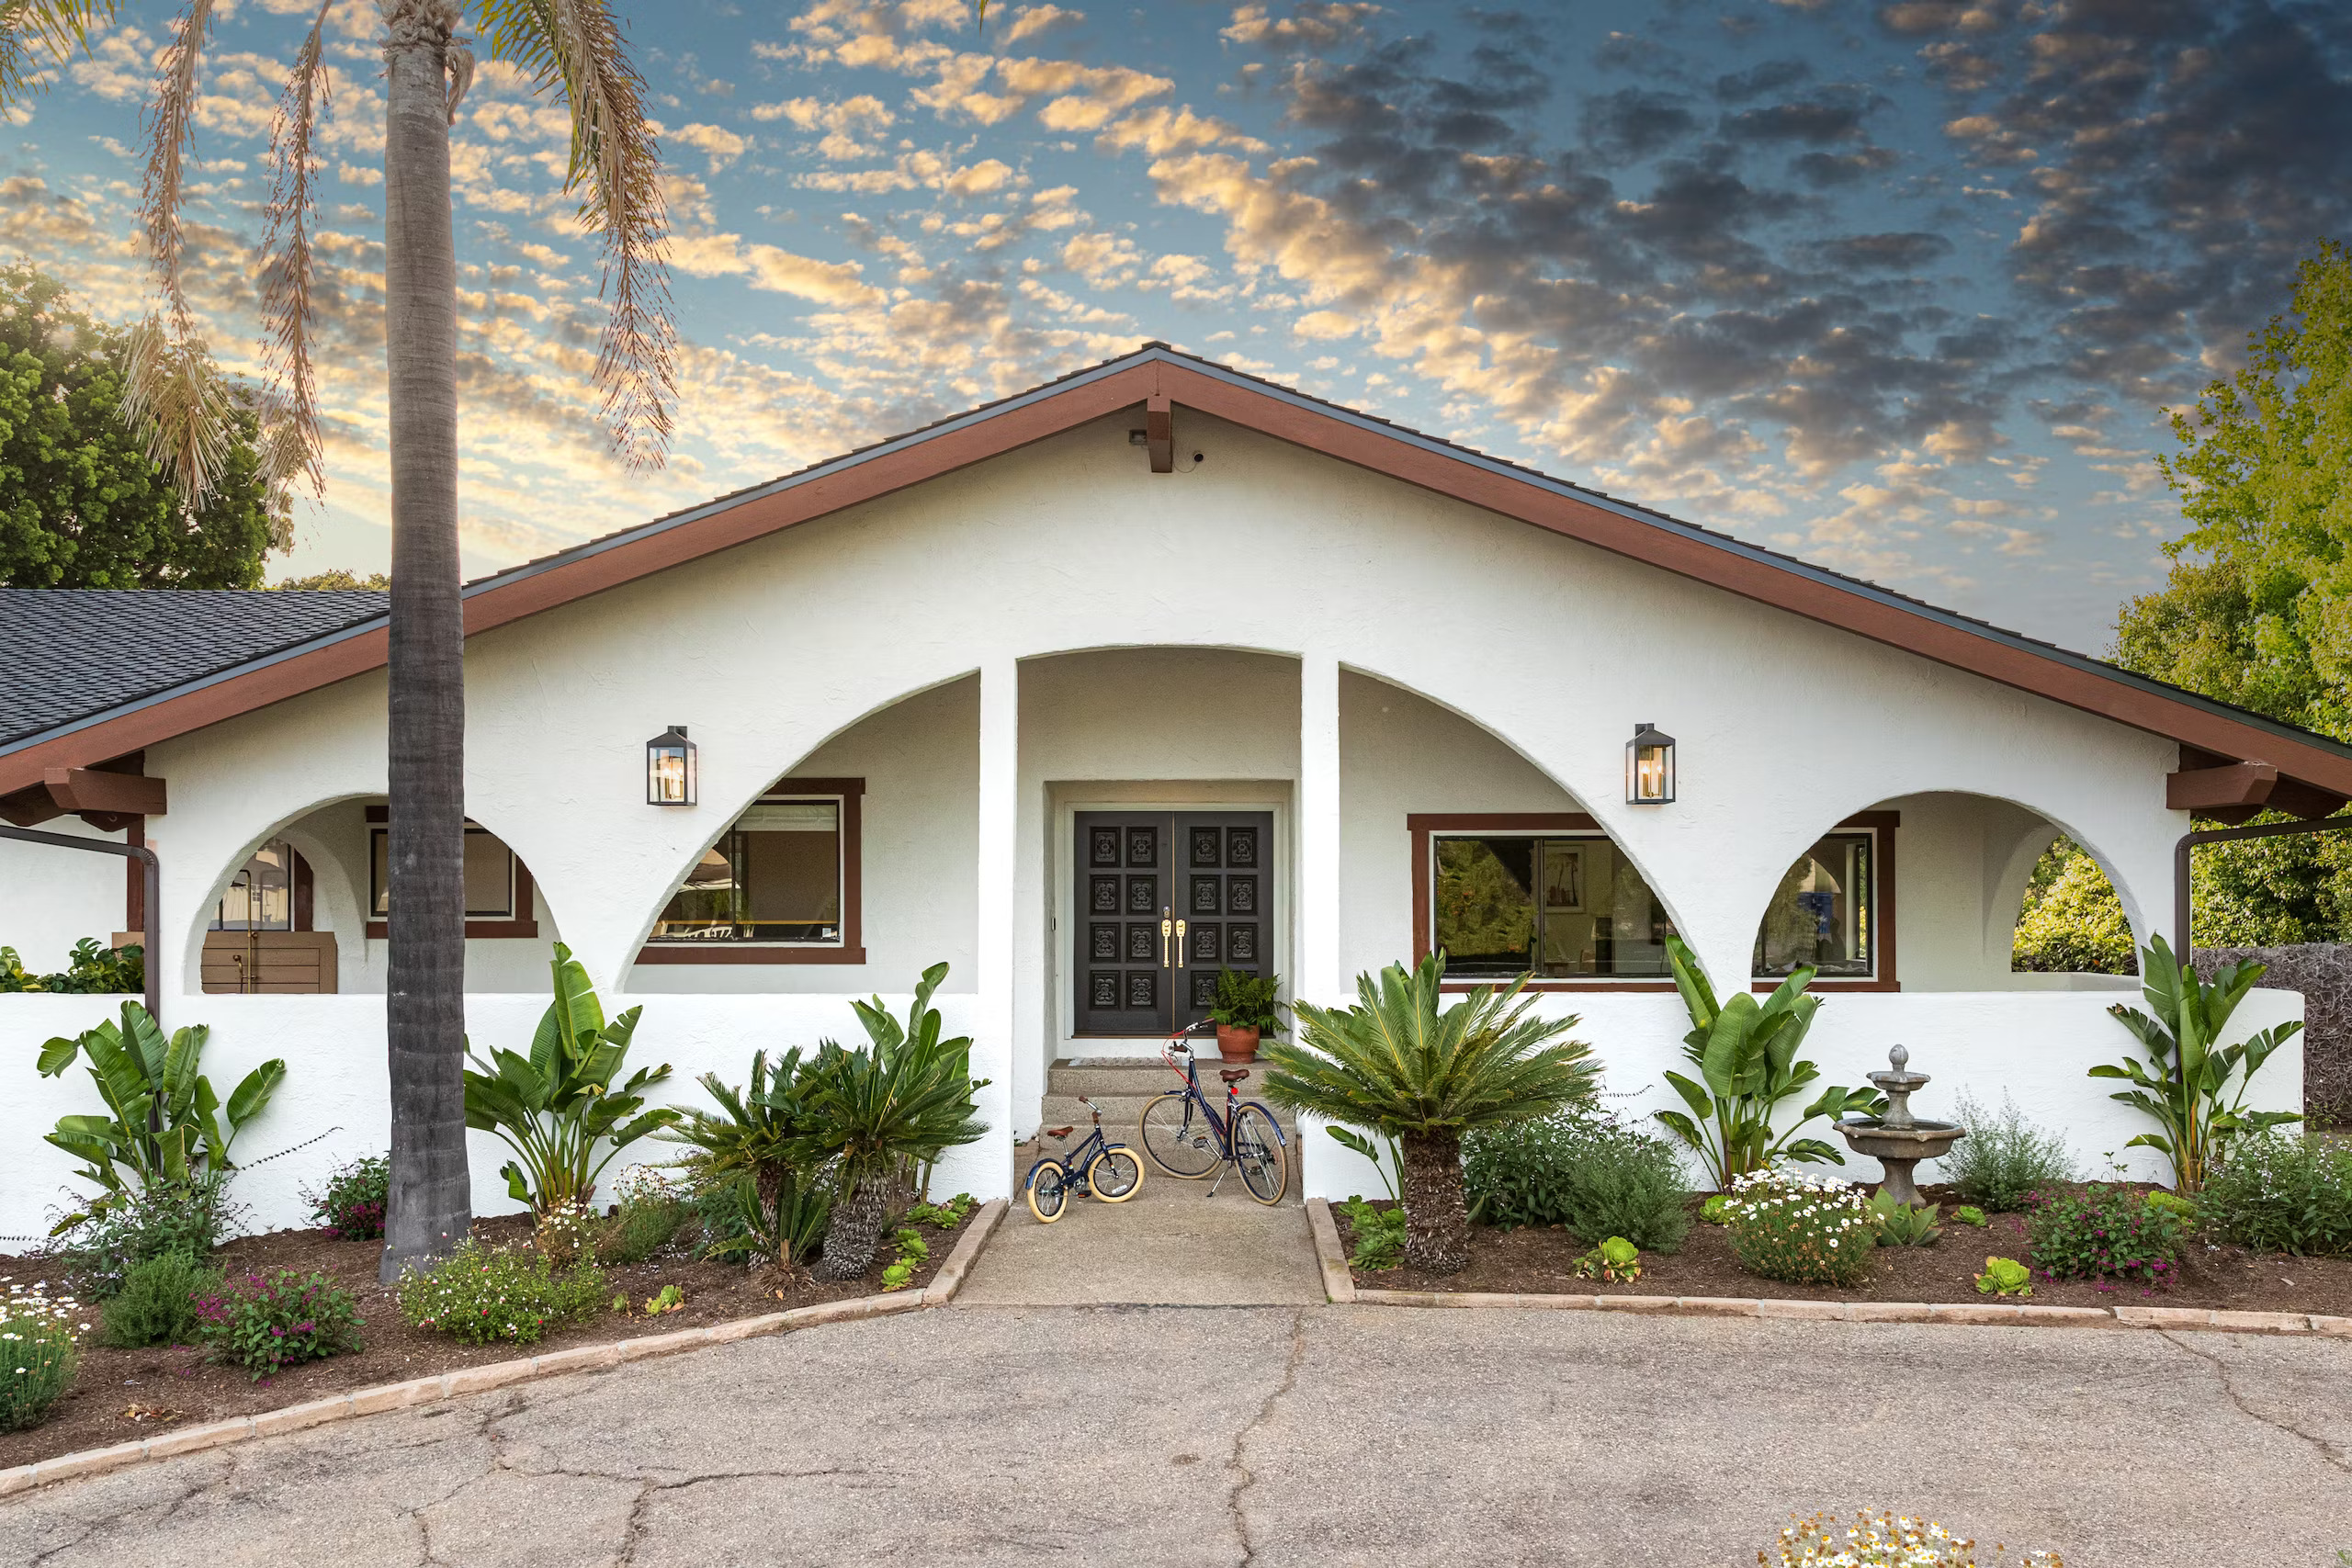 Exterior view of the front door of Santa Barbara vacation rental home called California Beaming.